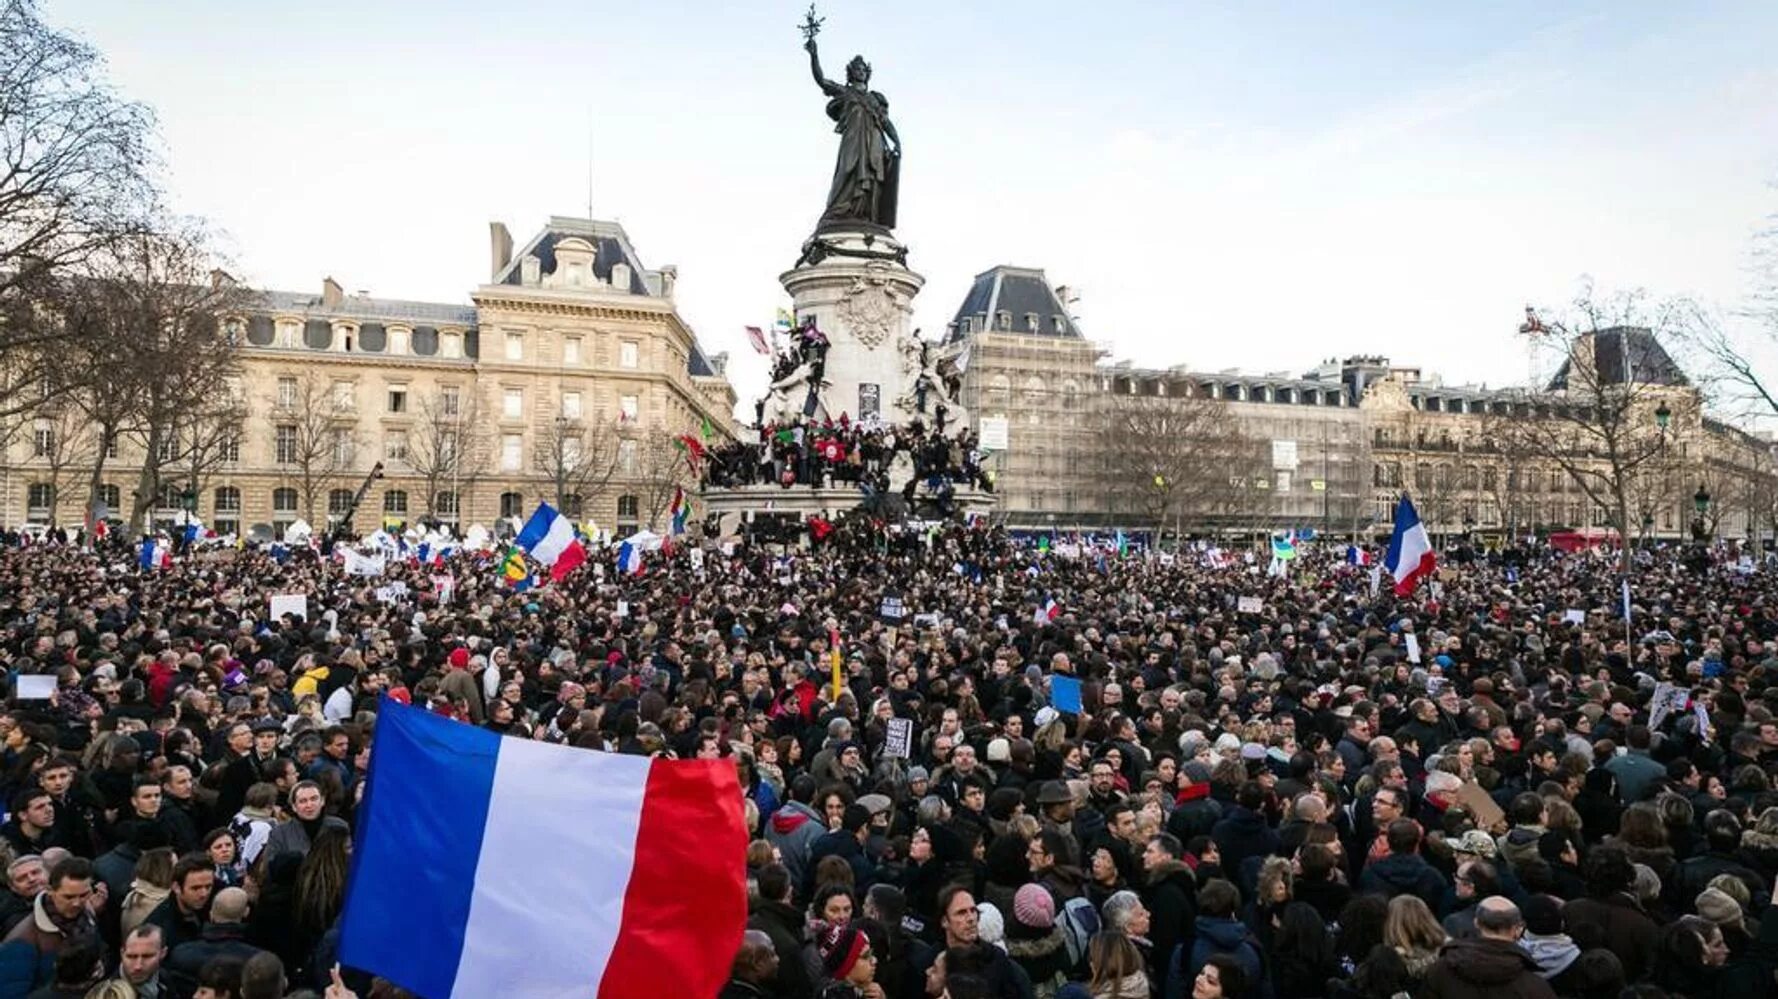 Сколько живет во франции. Народы Франции. Население Парижа. Франция люди. Французы население.